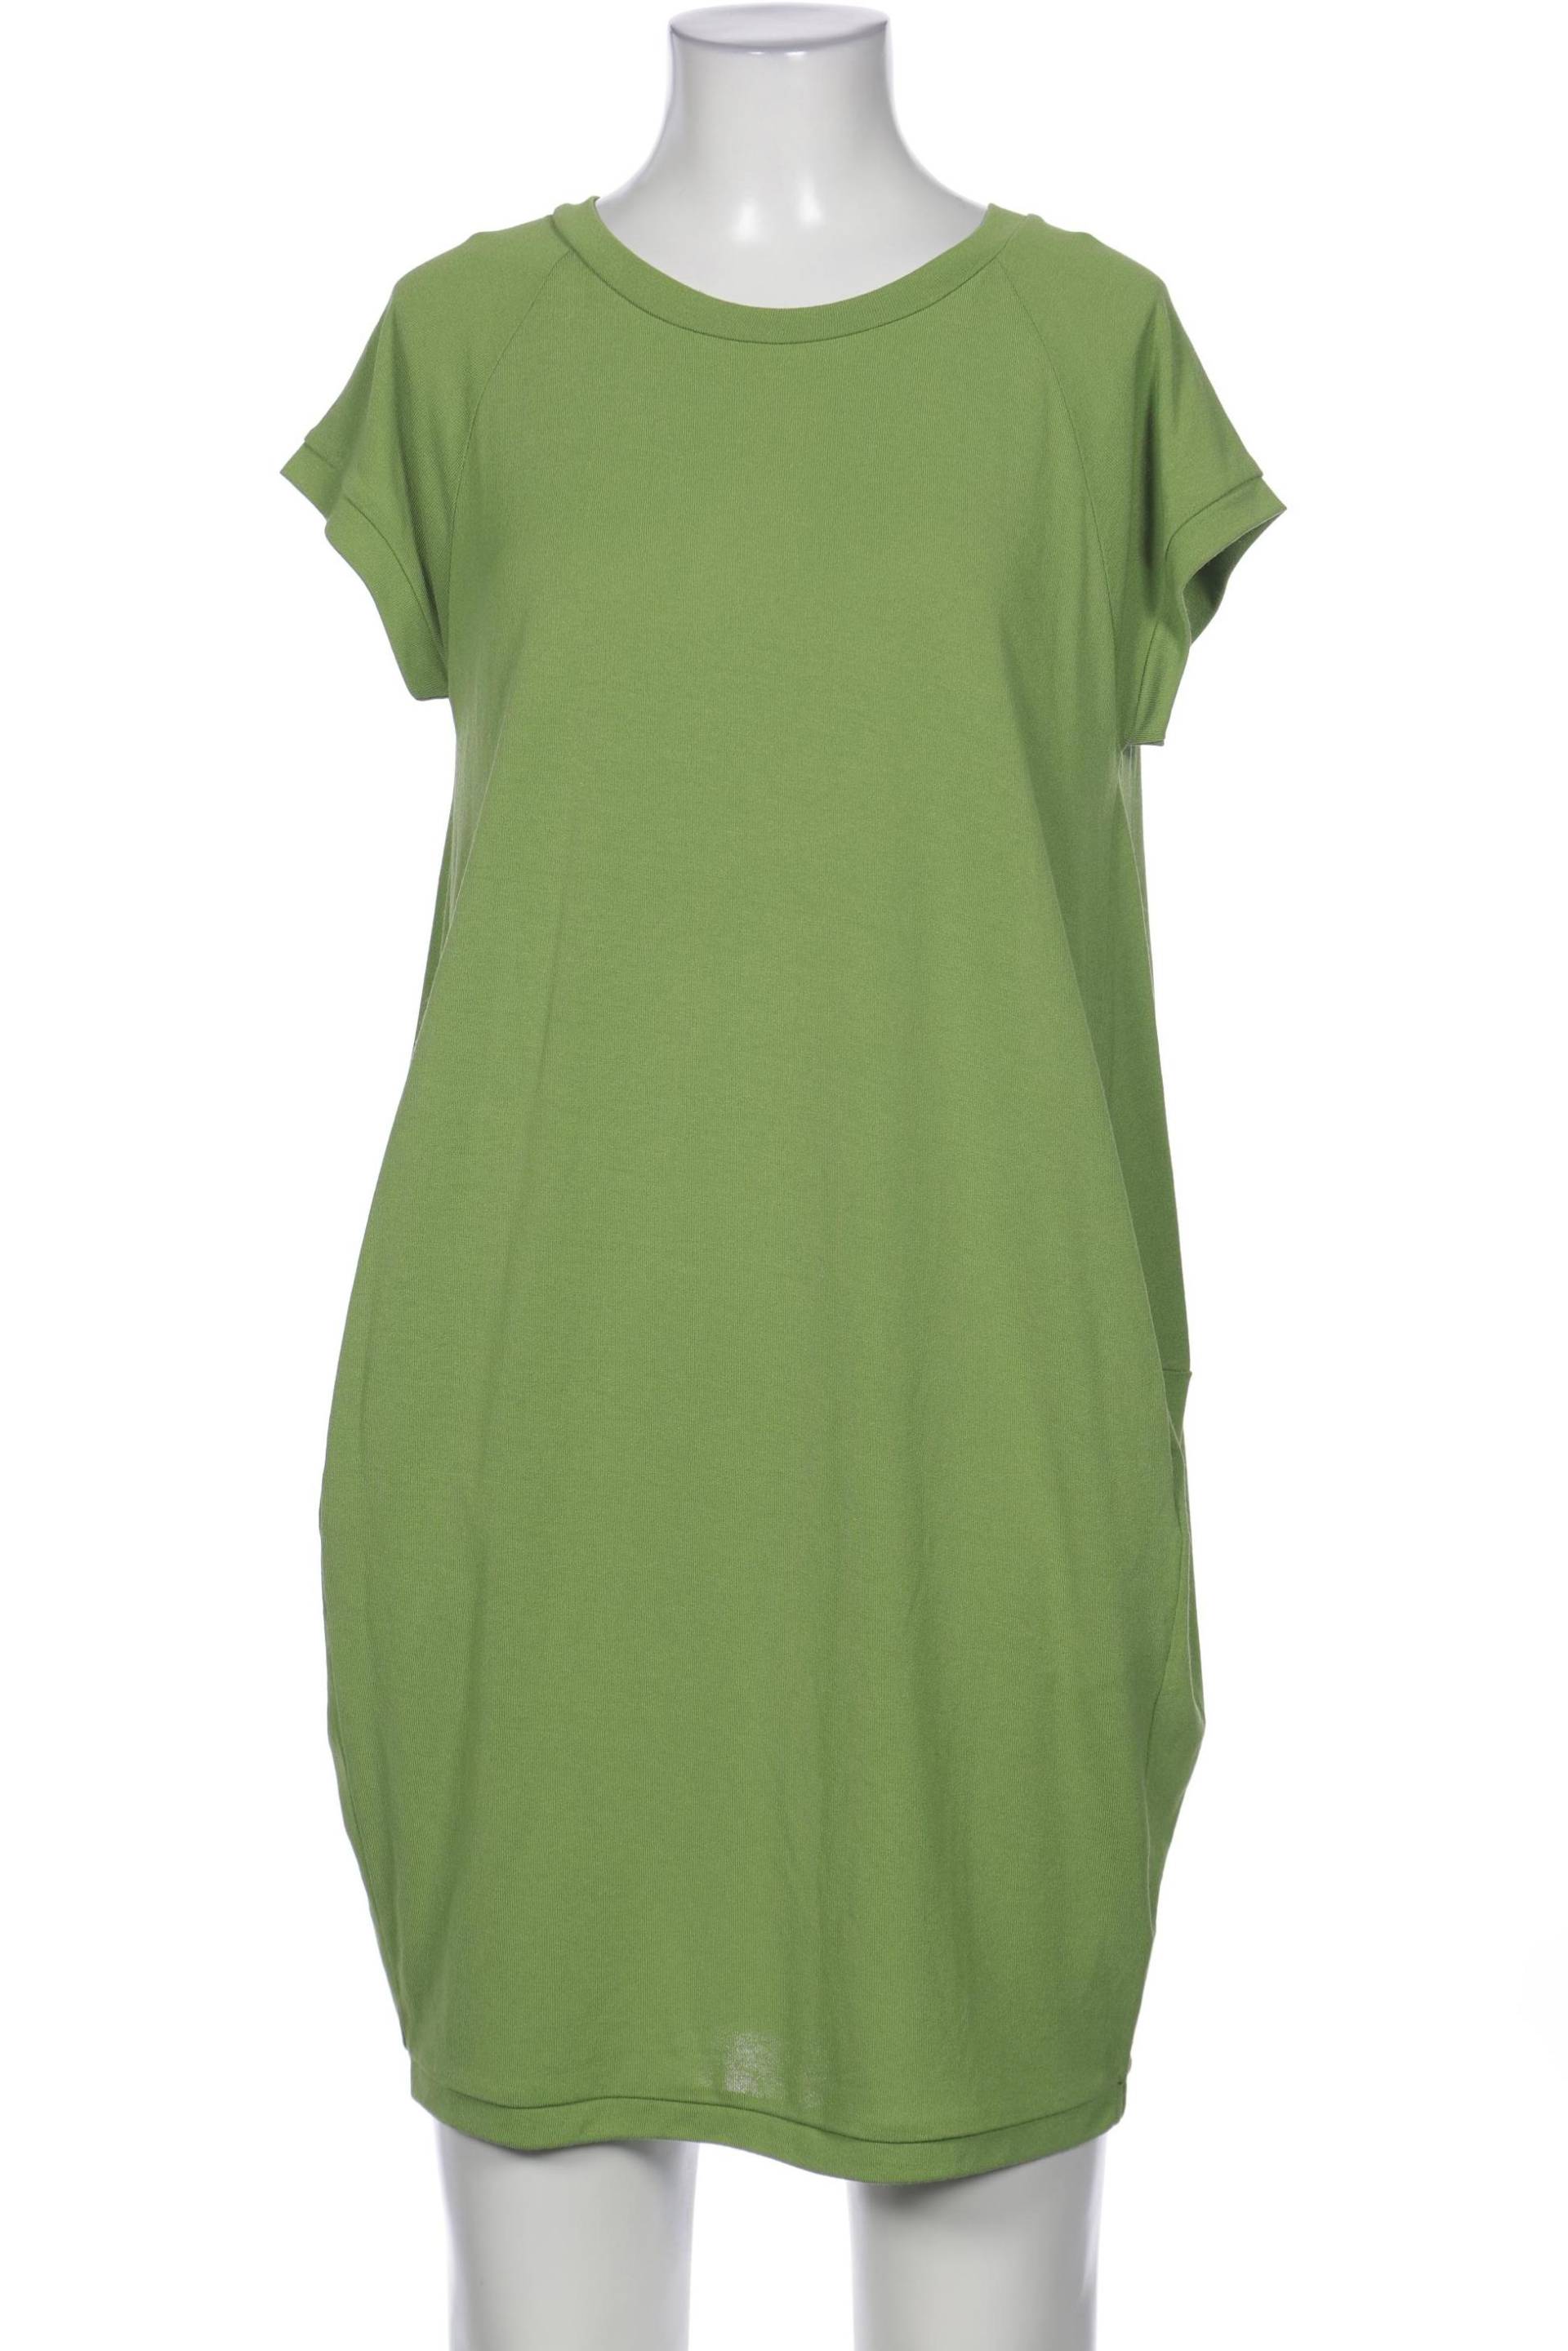 The MASAI Clothing Company Damen Kleid, grün von The MASAI Clothing Company